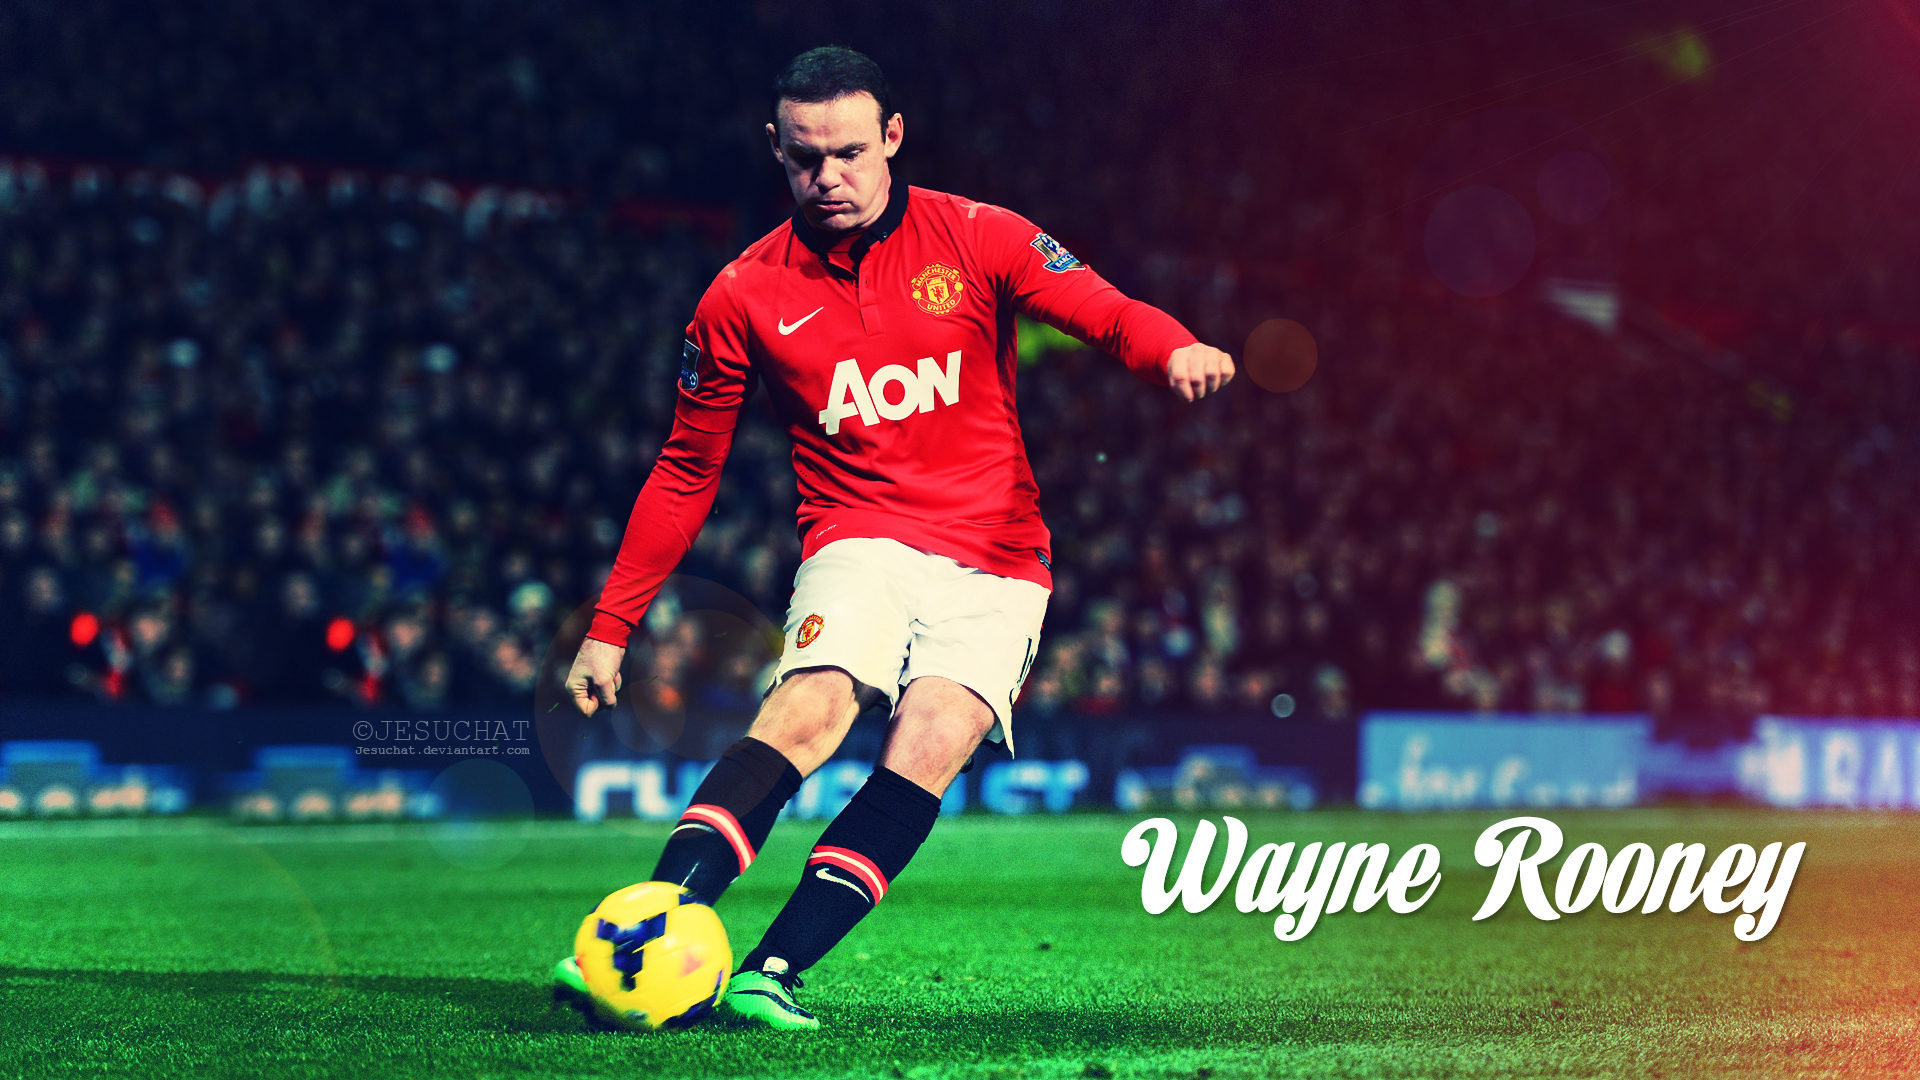 Wayne Rooney - wallpaper.